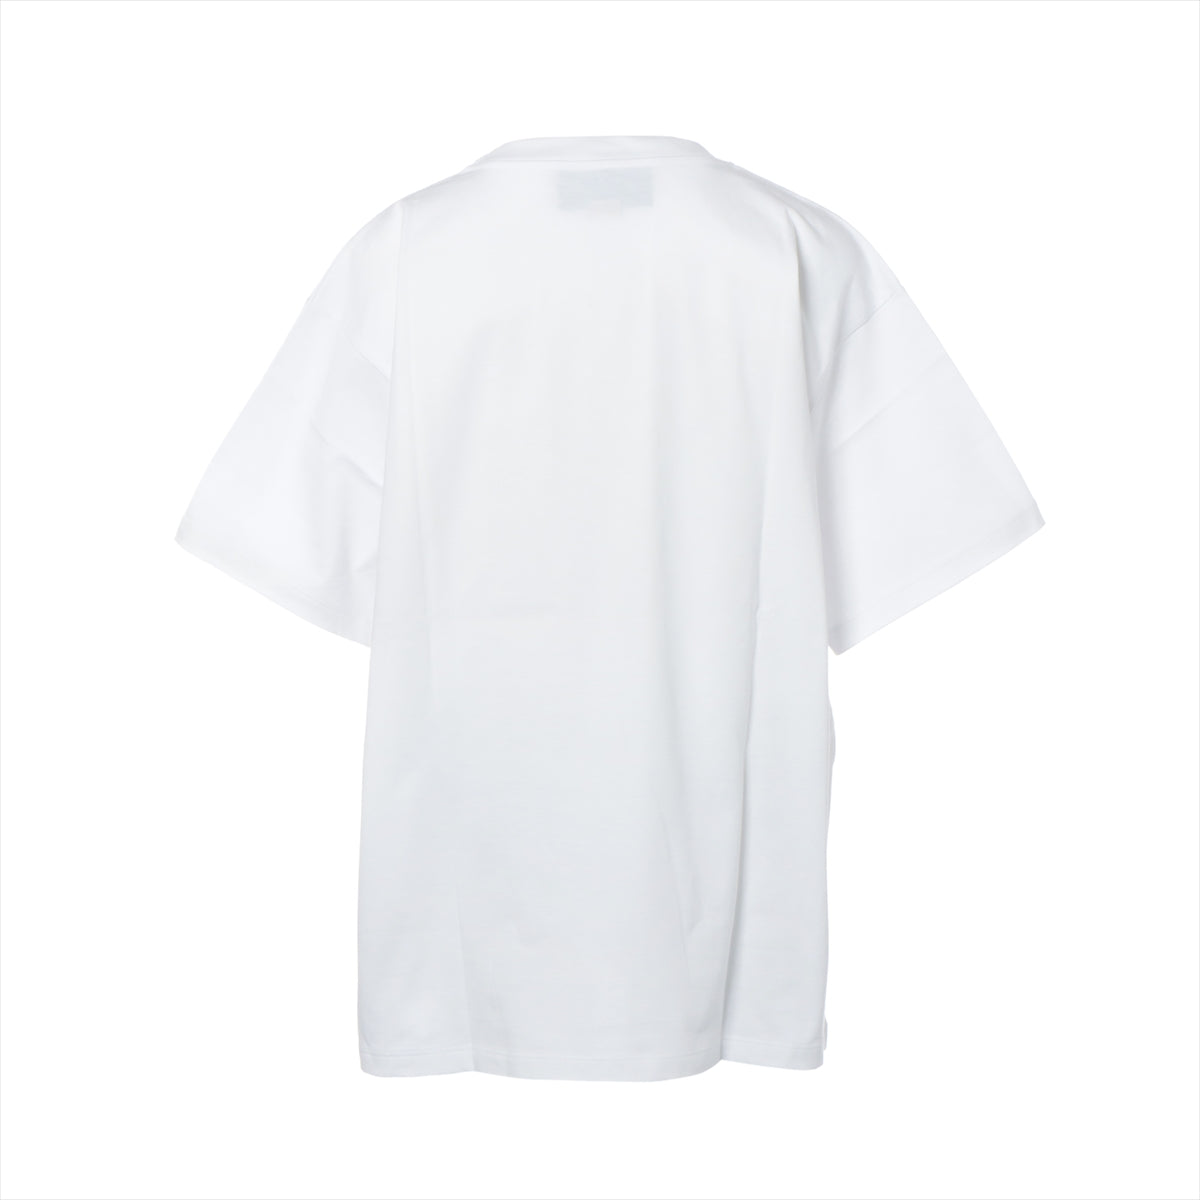 Gucci x adidas Cotton T-shirt S Ladies' White  723384